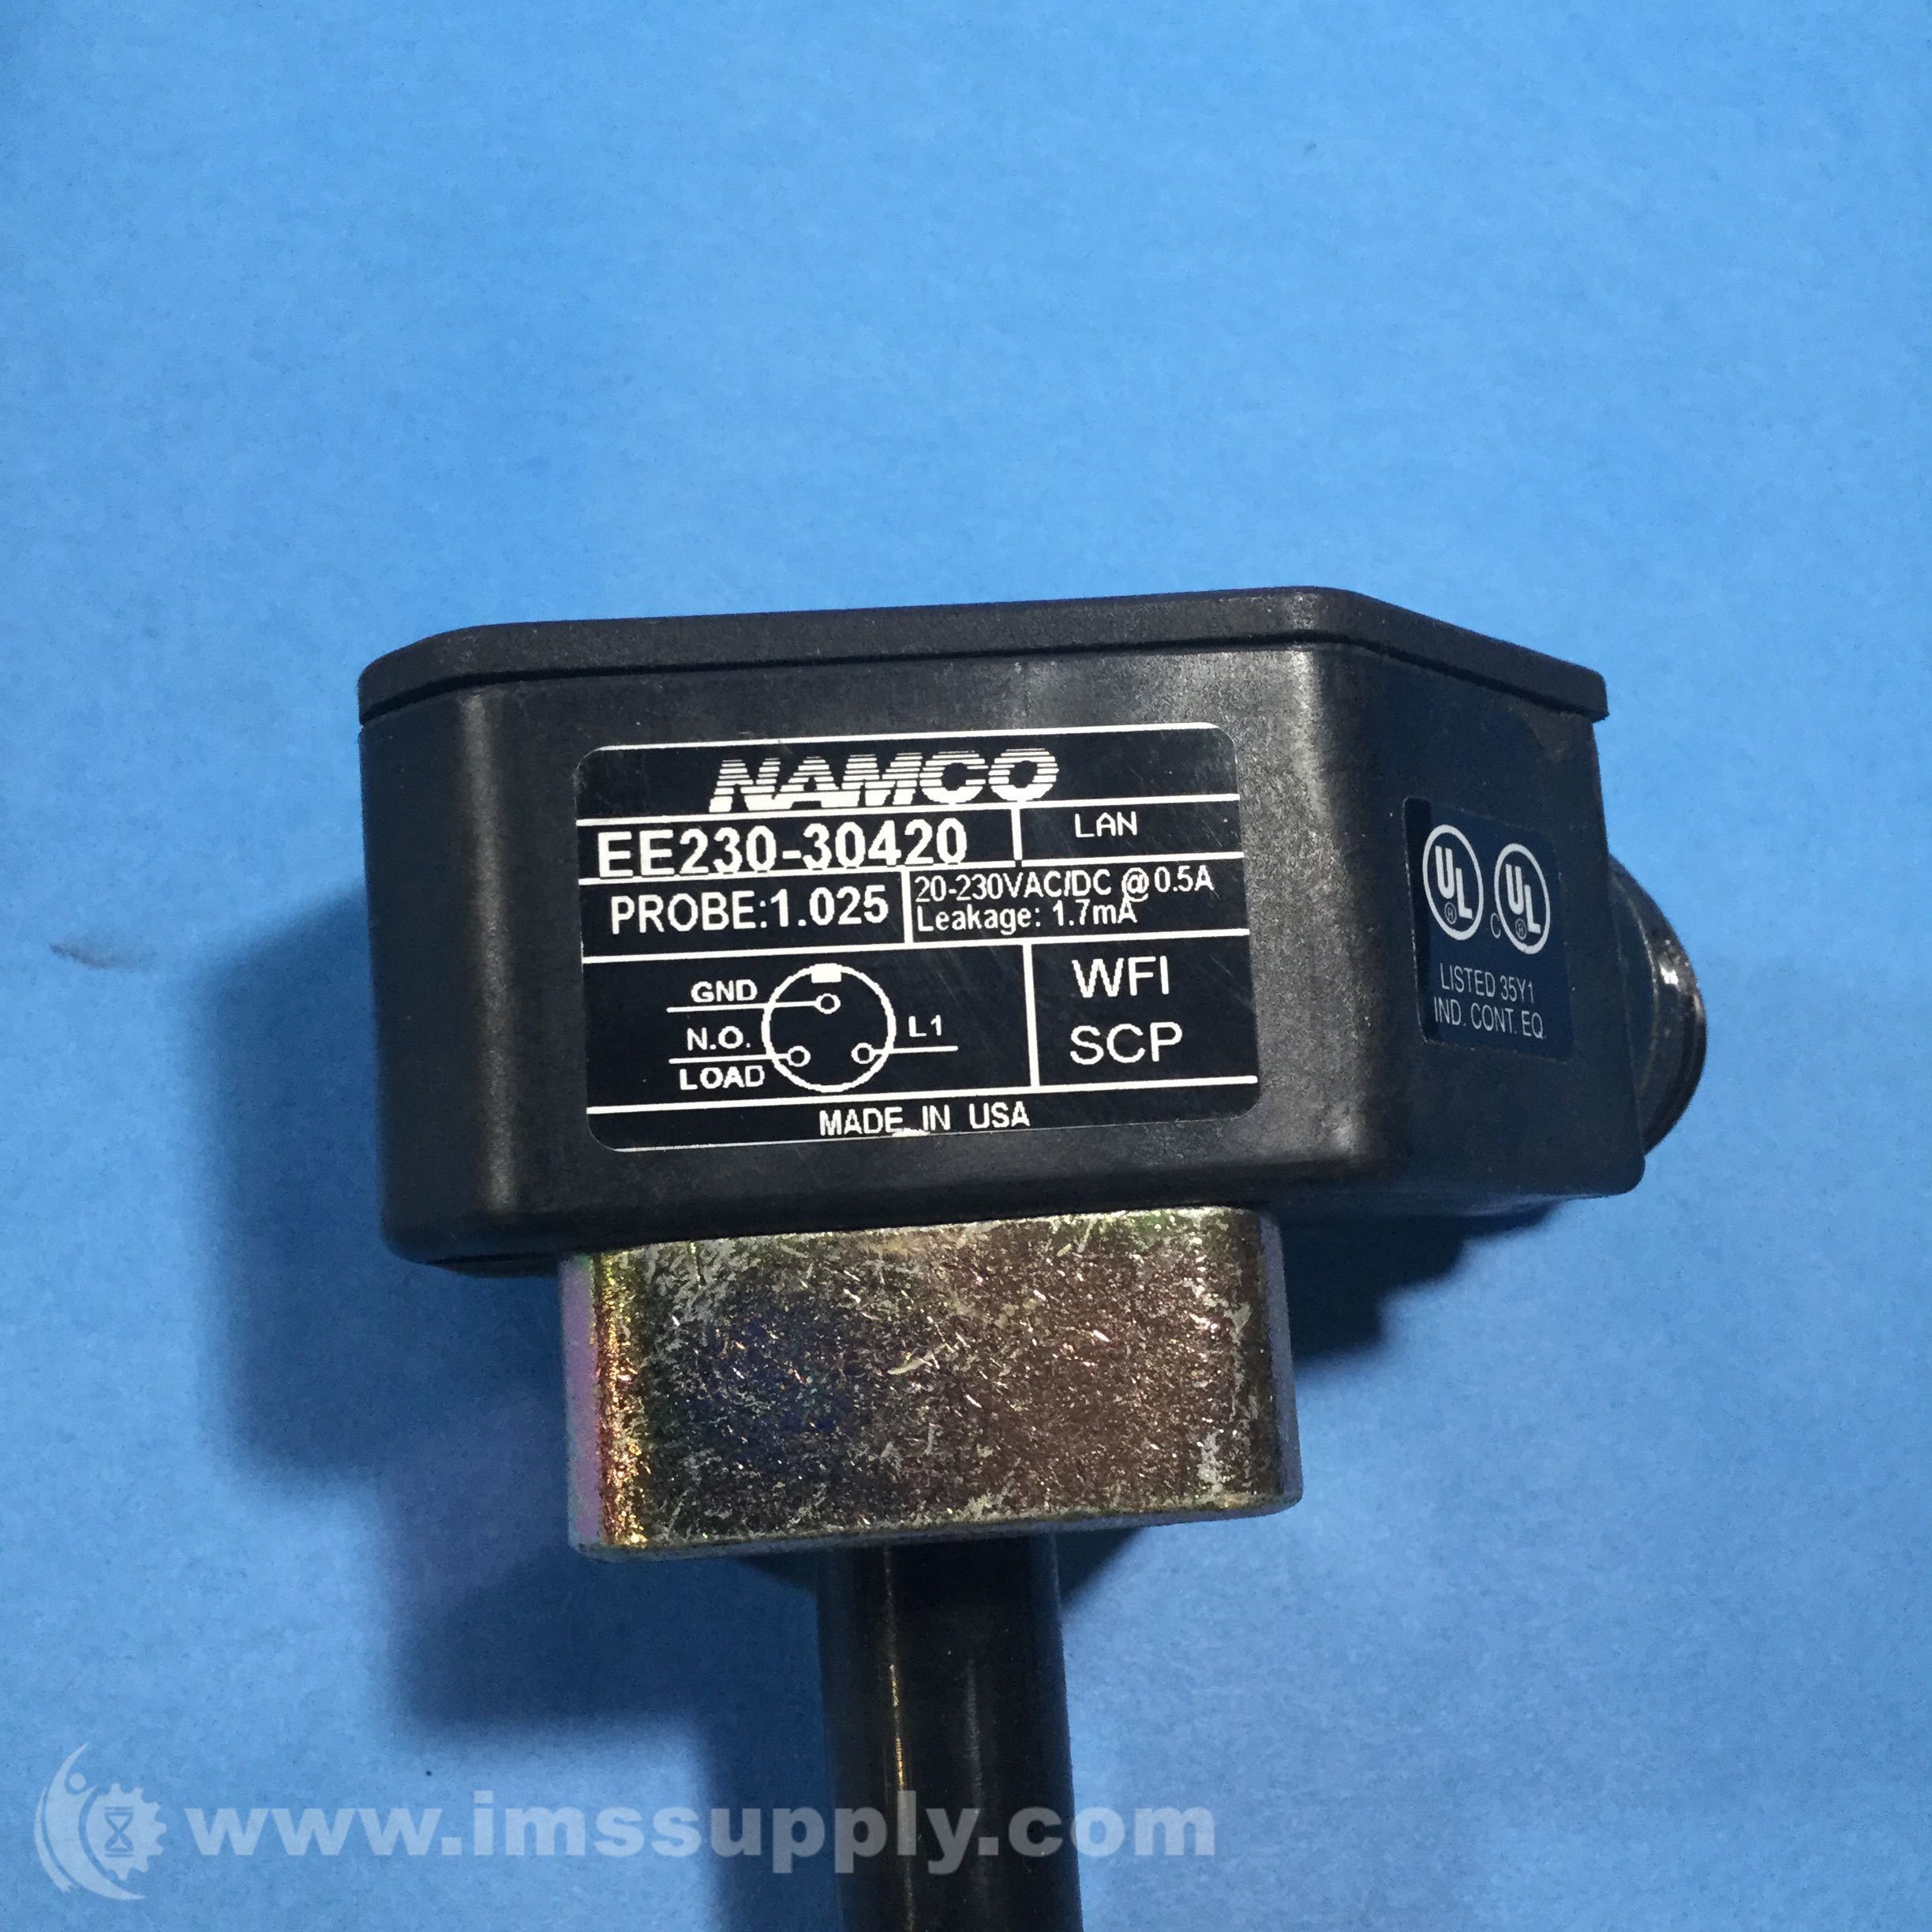 Namco EE230-30420 Cylindicator Proximity Switch Sensor NEW IN BOX 